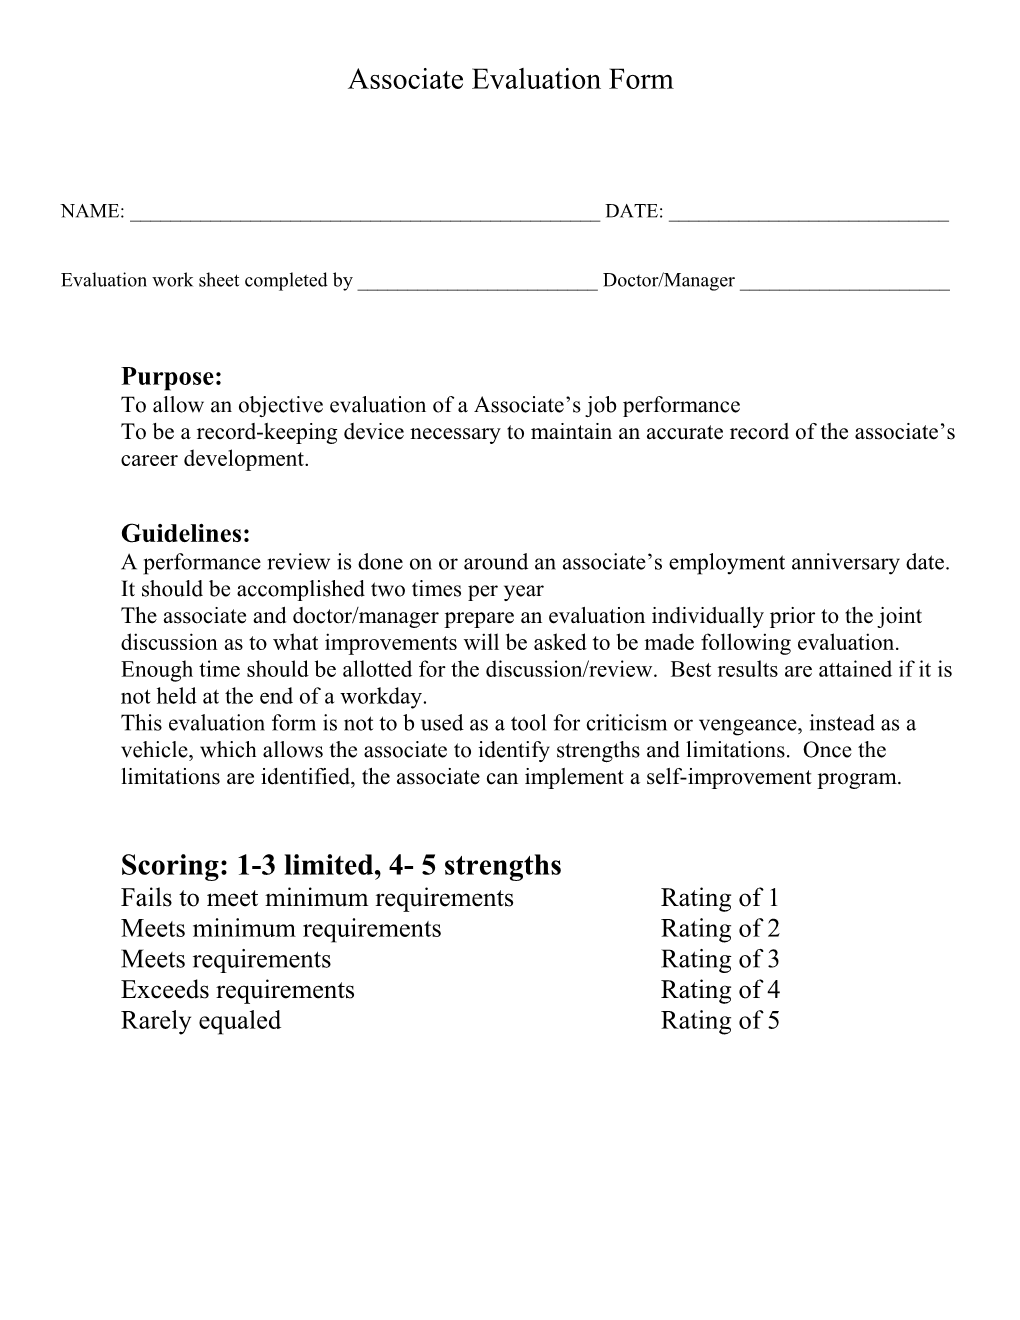 Team Member Evaluation Form